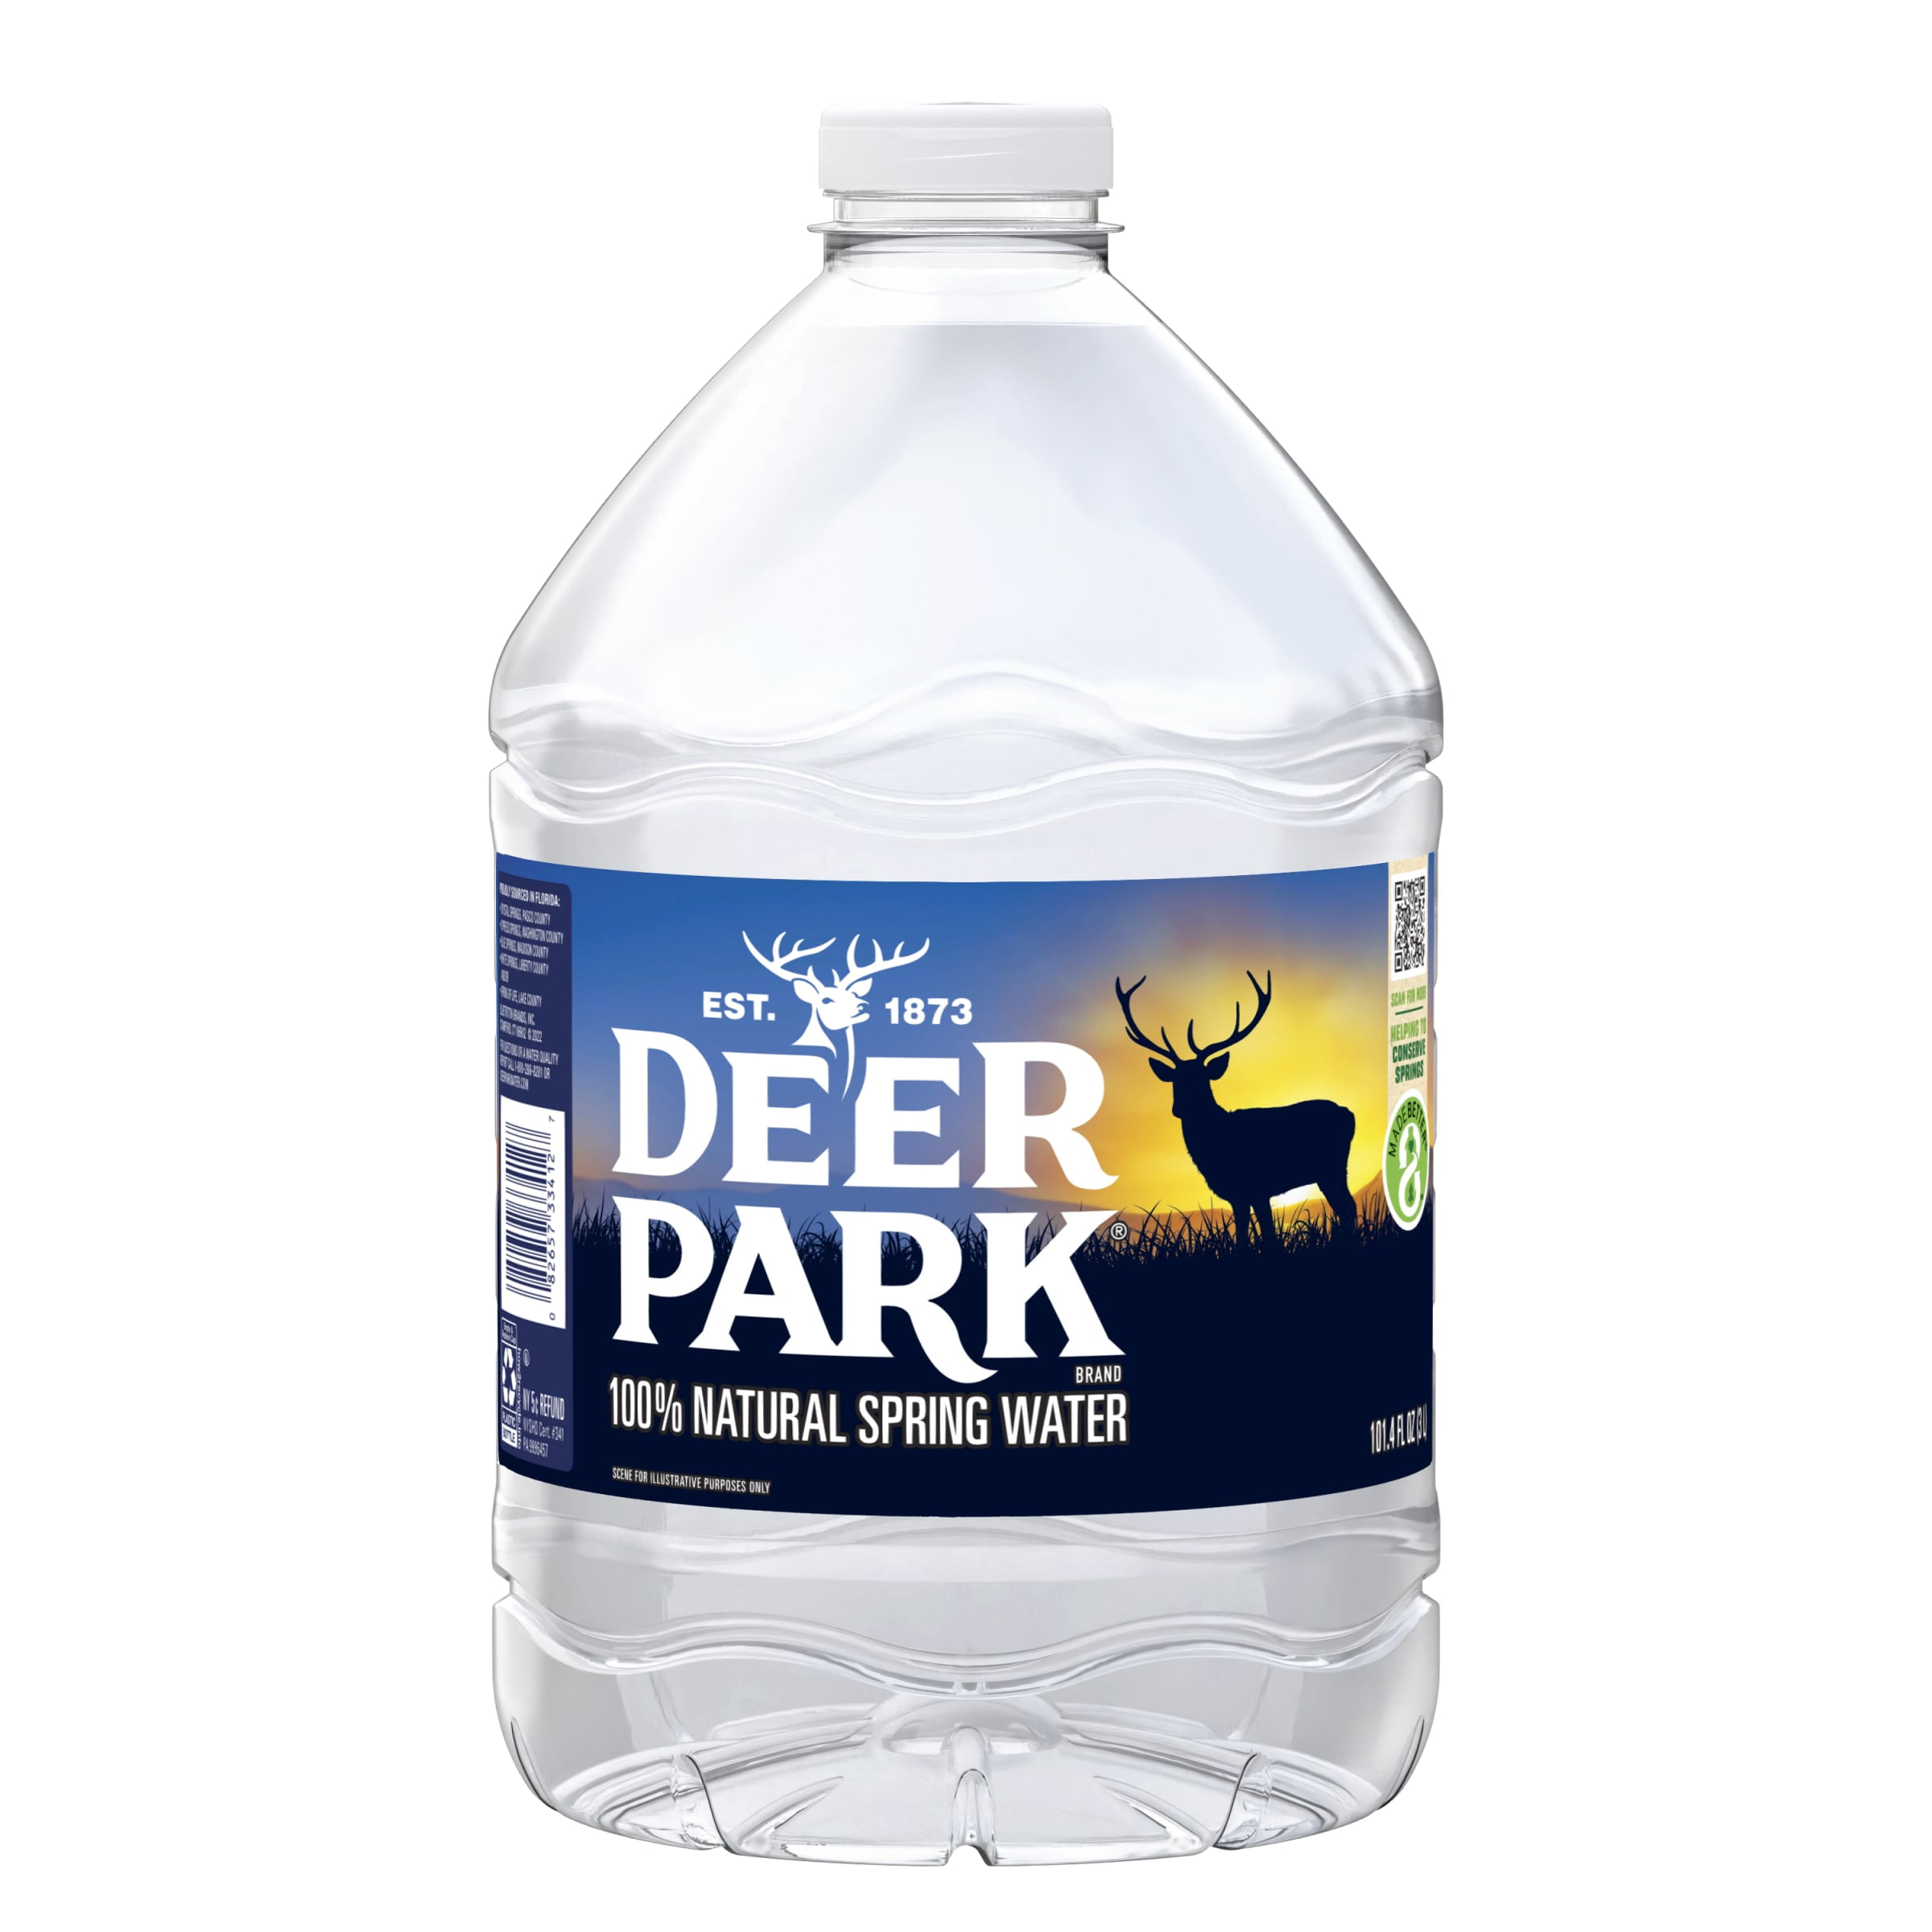 DEER PARK Brand 100% Natural Spring Water, 101.4-ounce plastic jug